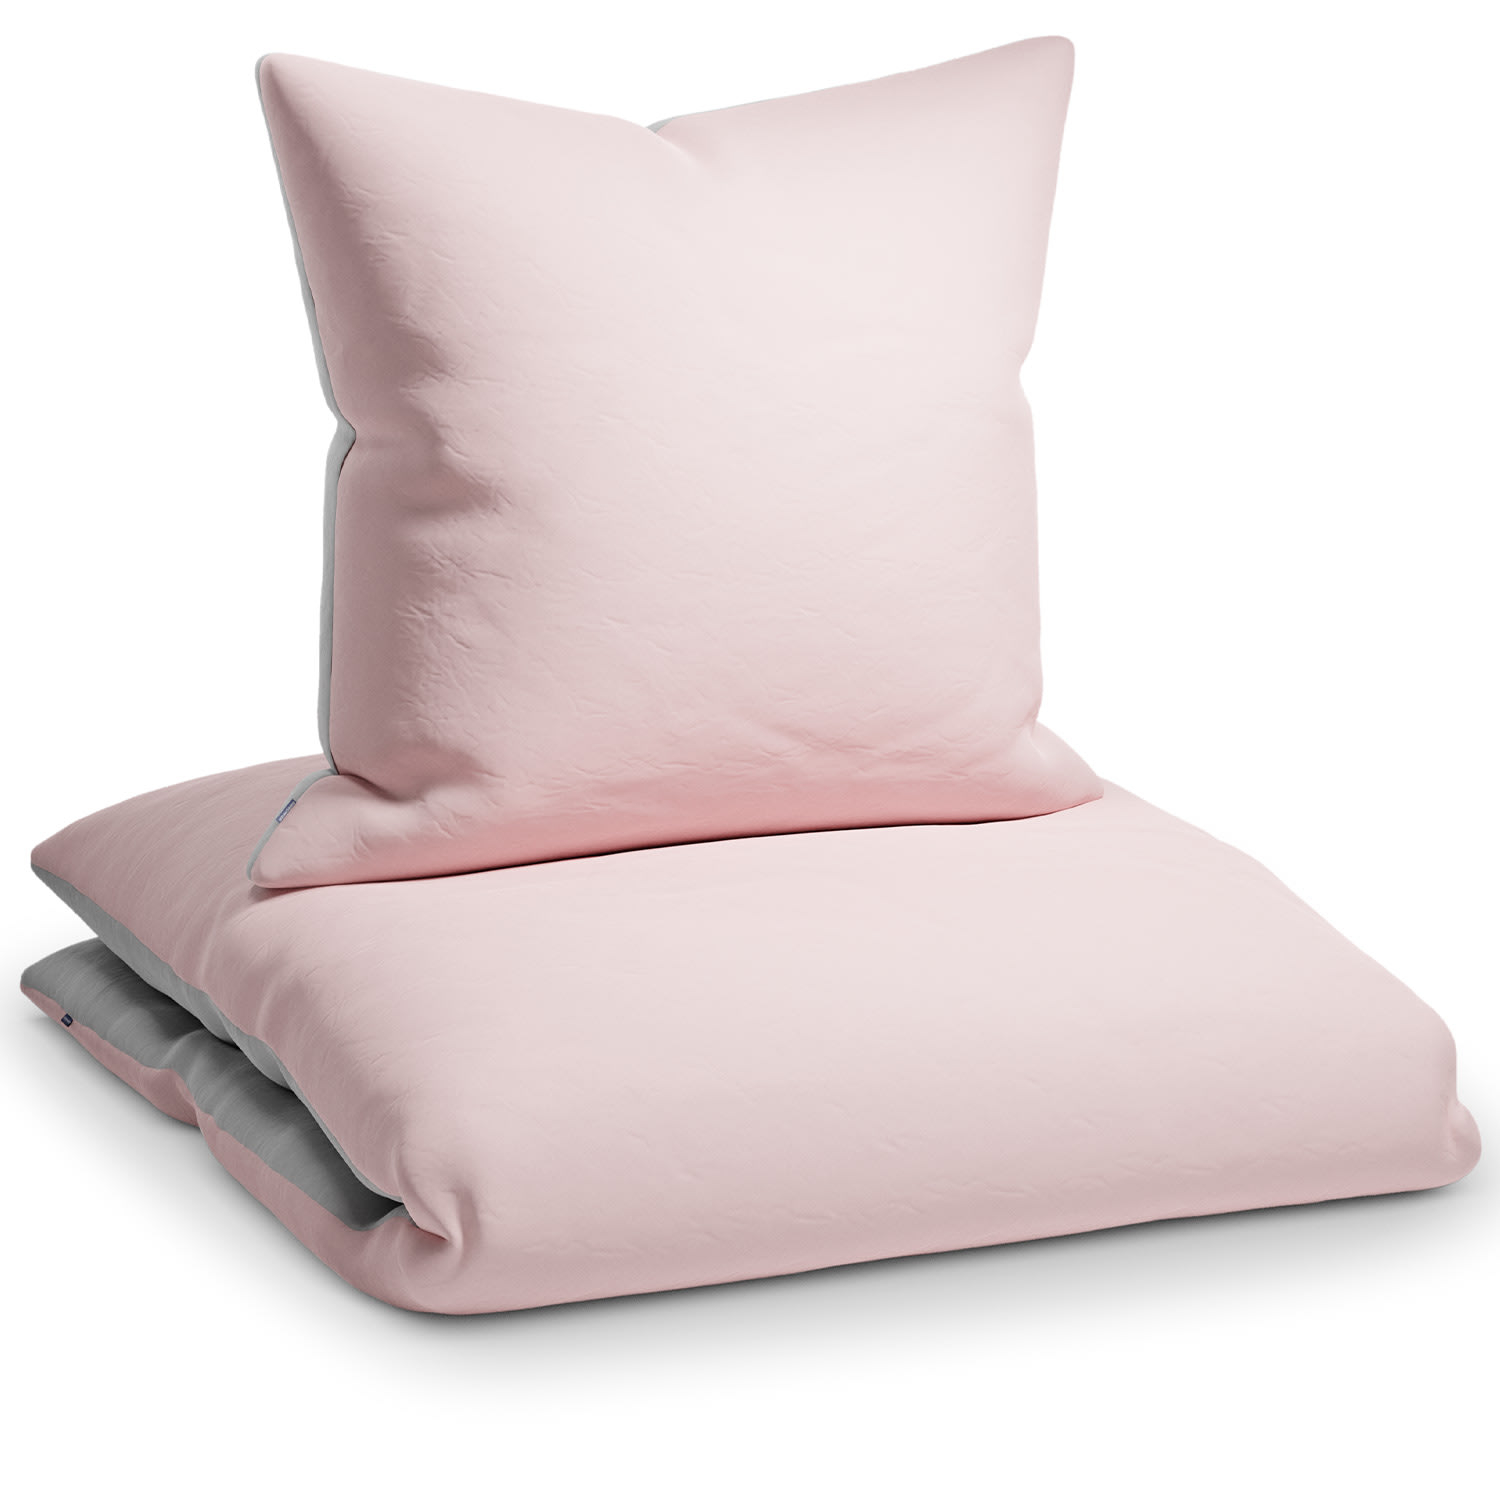 Sleepwise Soft Wonder-Edition, bedding, 135 x 200 cm, light grey/pink